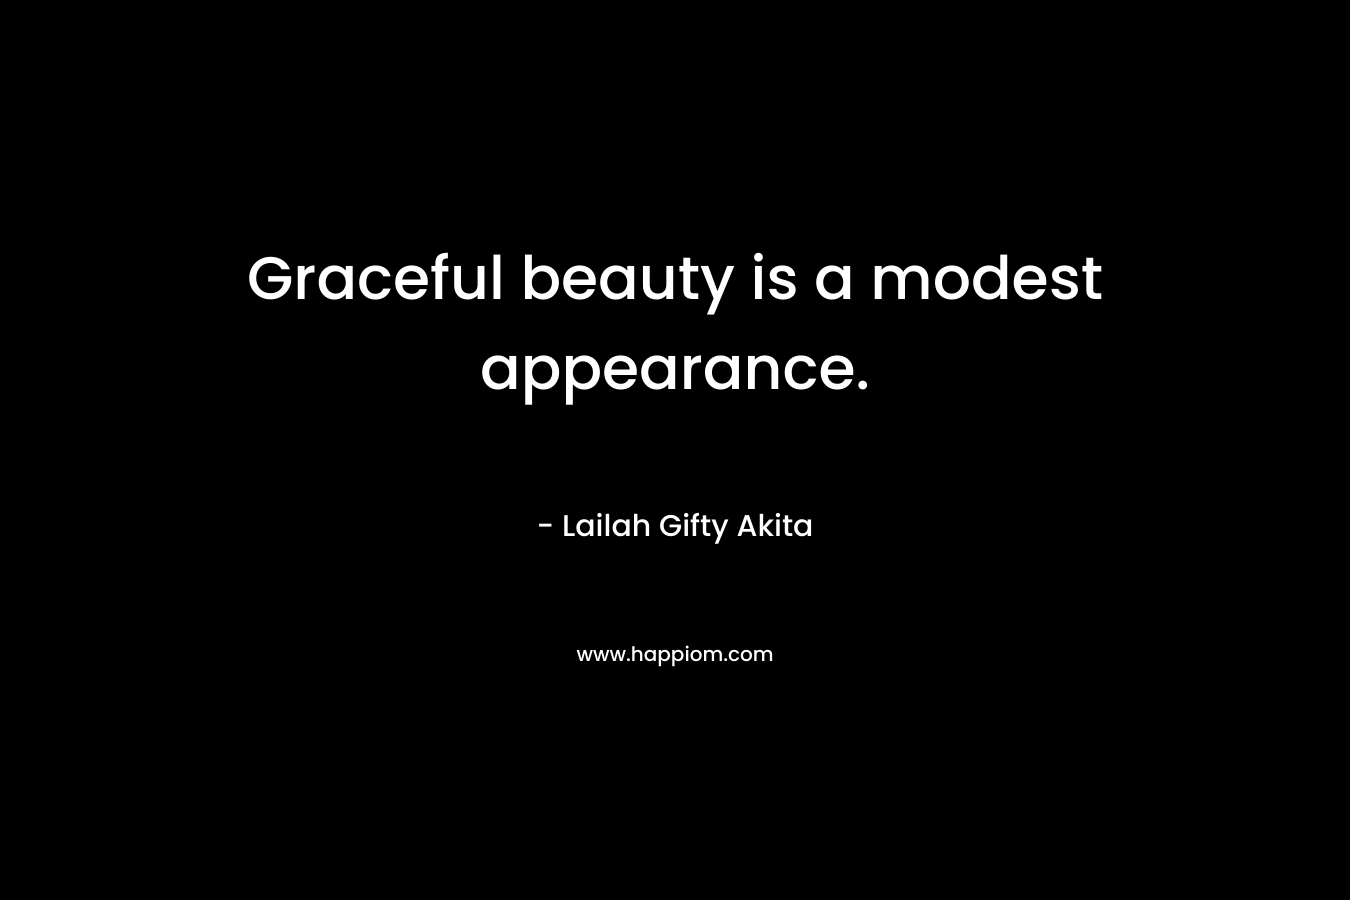 Graceful beauty is a modest appearance.